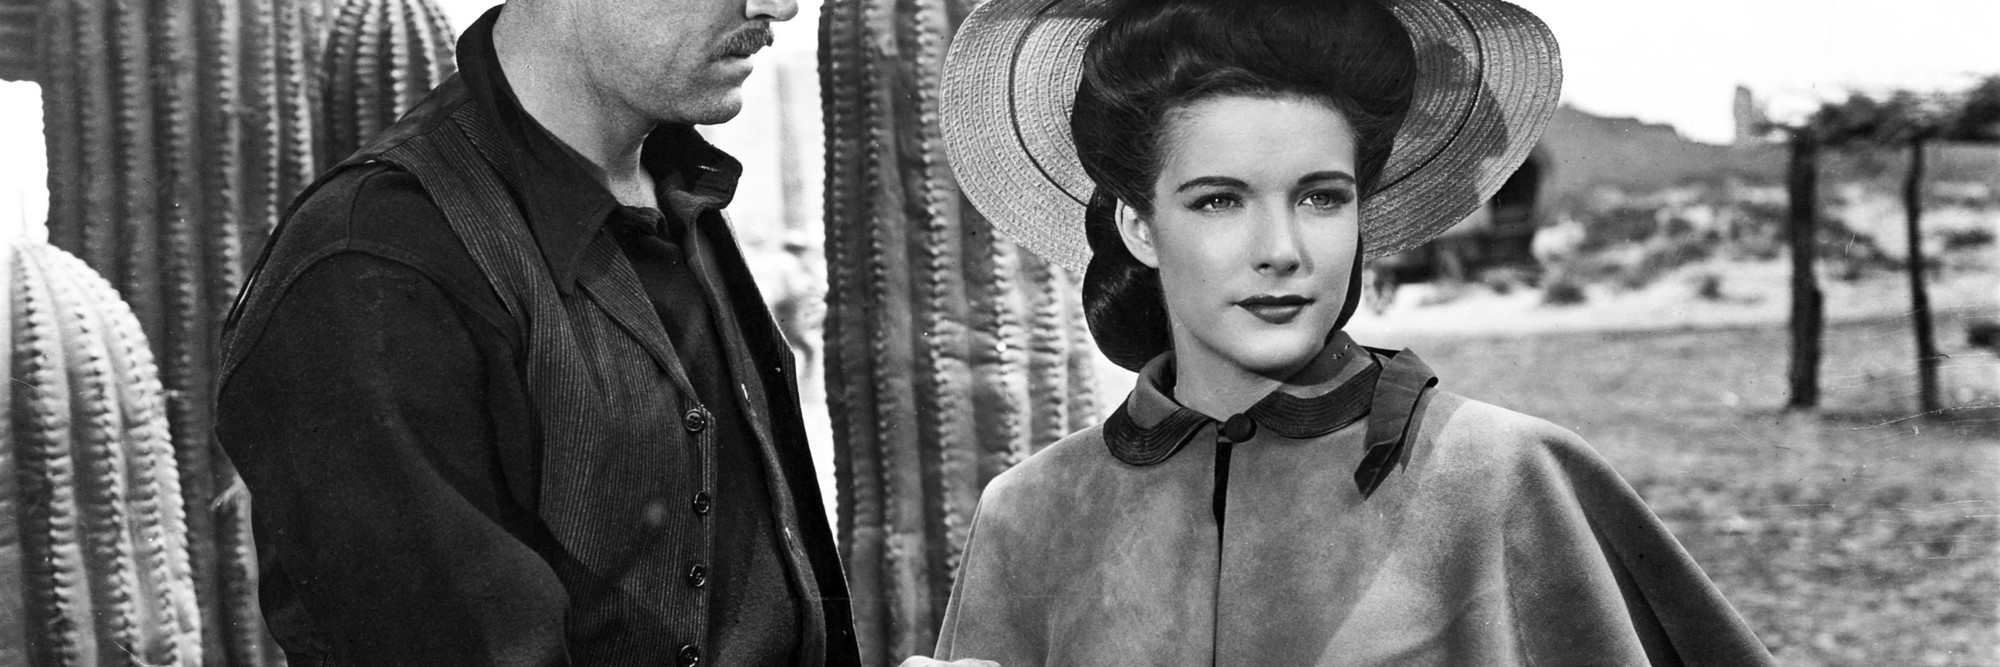 My Darling Clementine. 1946. USA. Directed by John Ford. Courtesy Twentieth Century Fox Film Corporation/Photofest